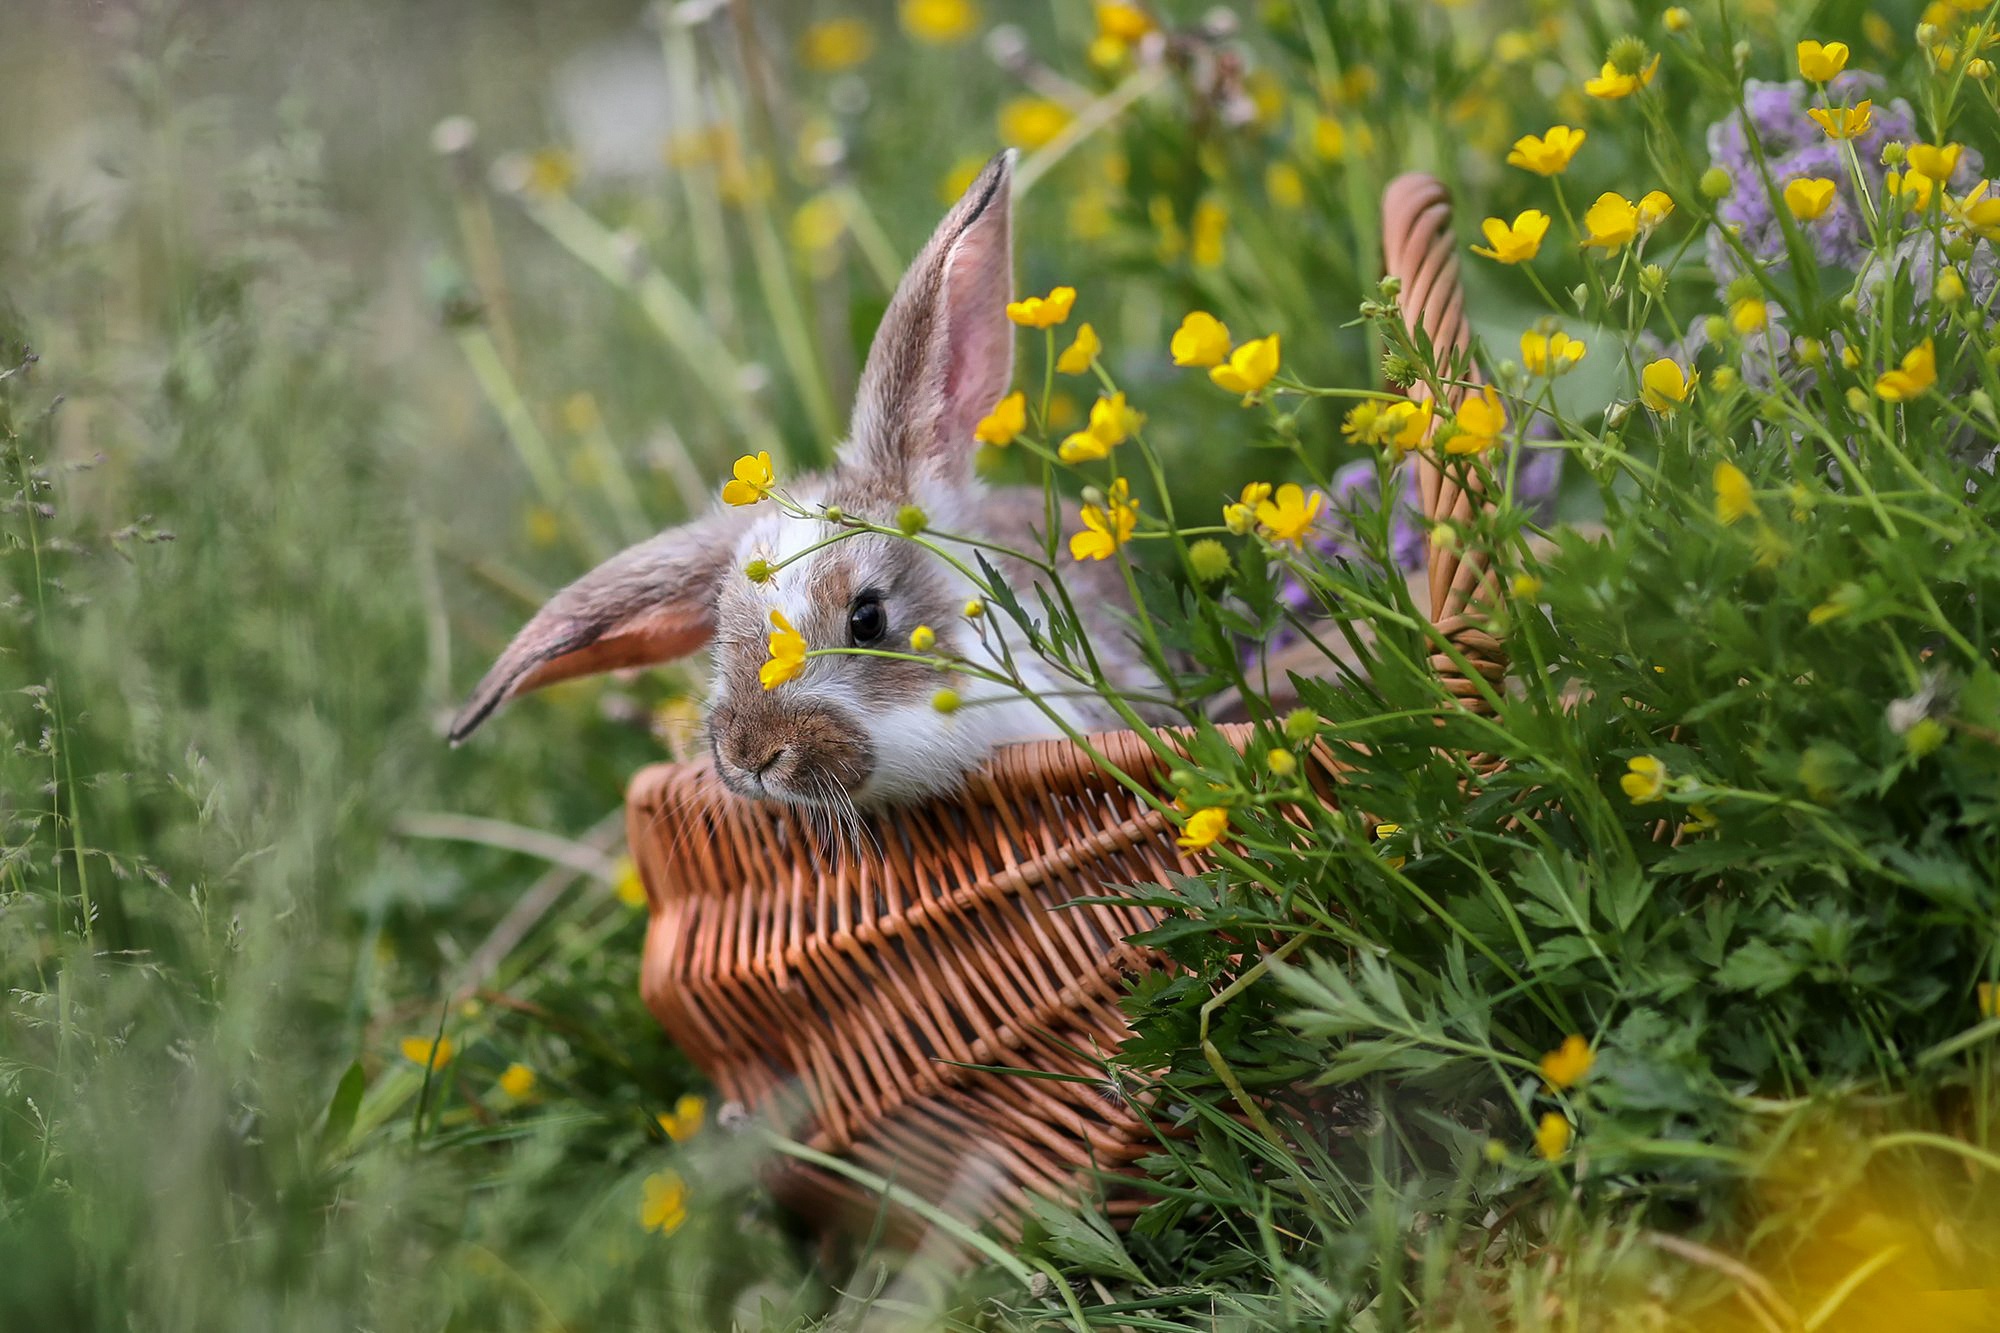 General 2000x1333 animals mammals flowers plants yellow flowers baskets outdoors closeup rabbits